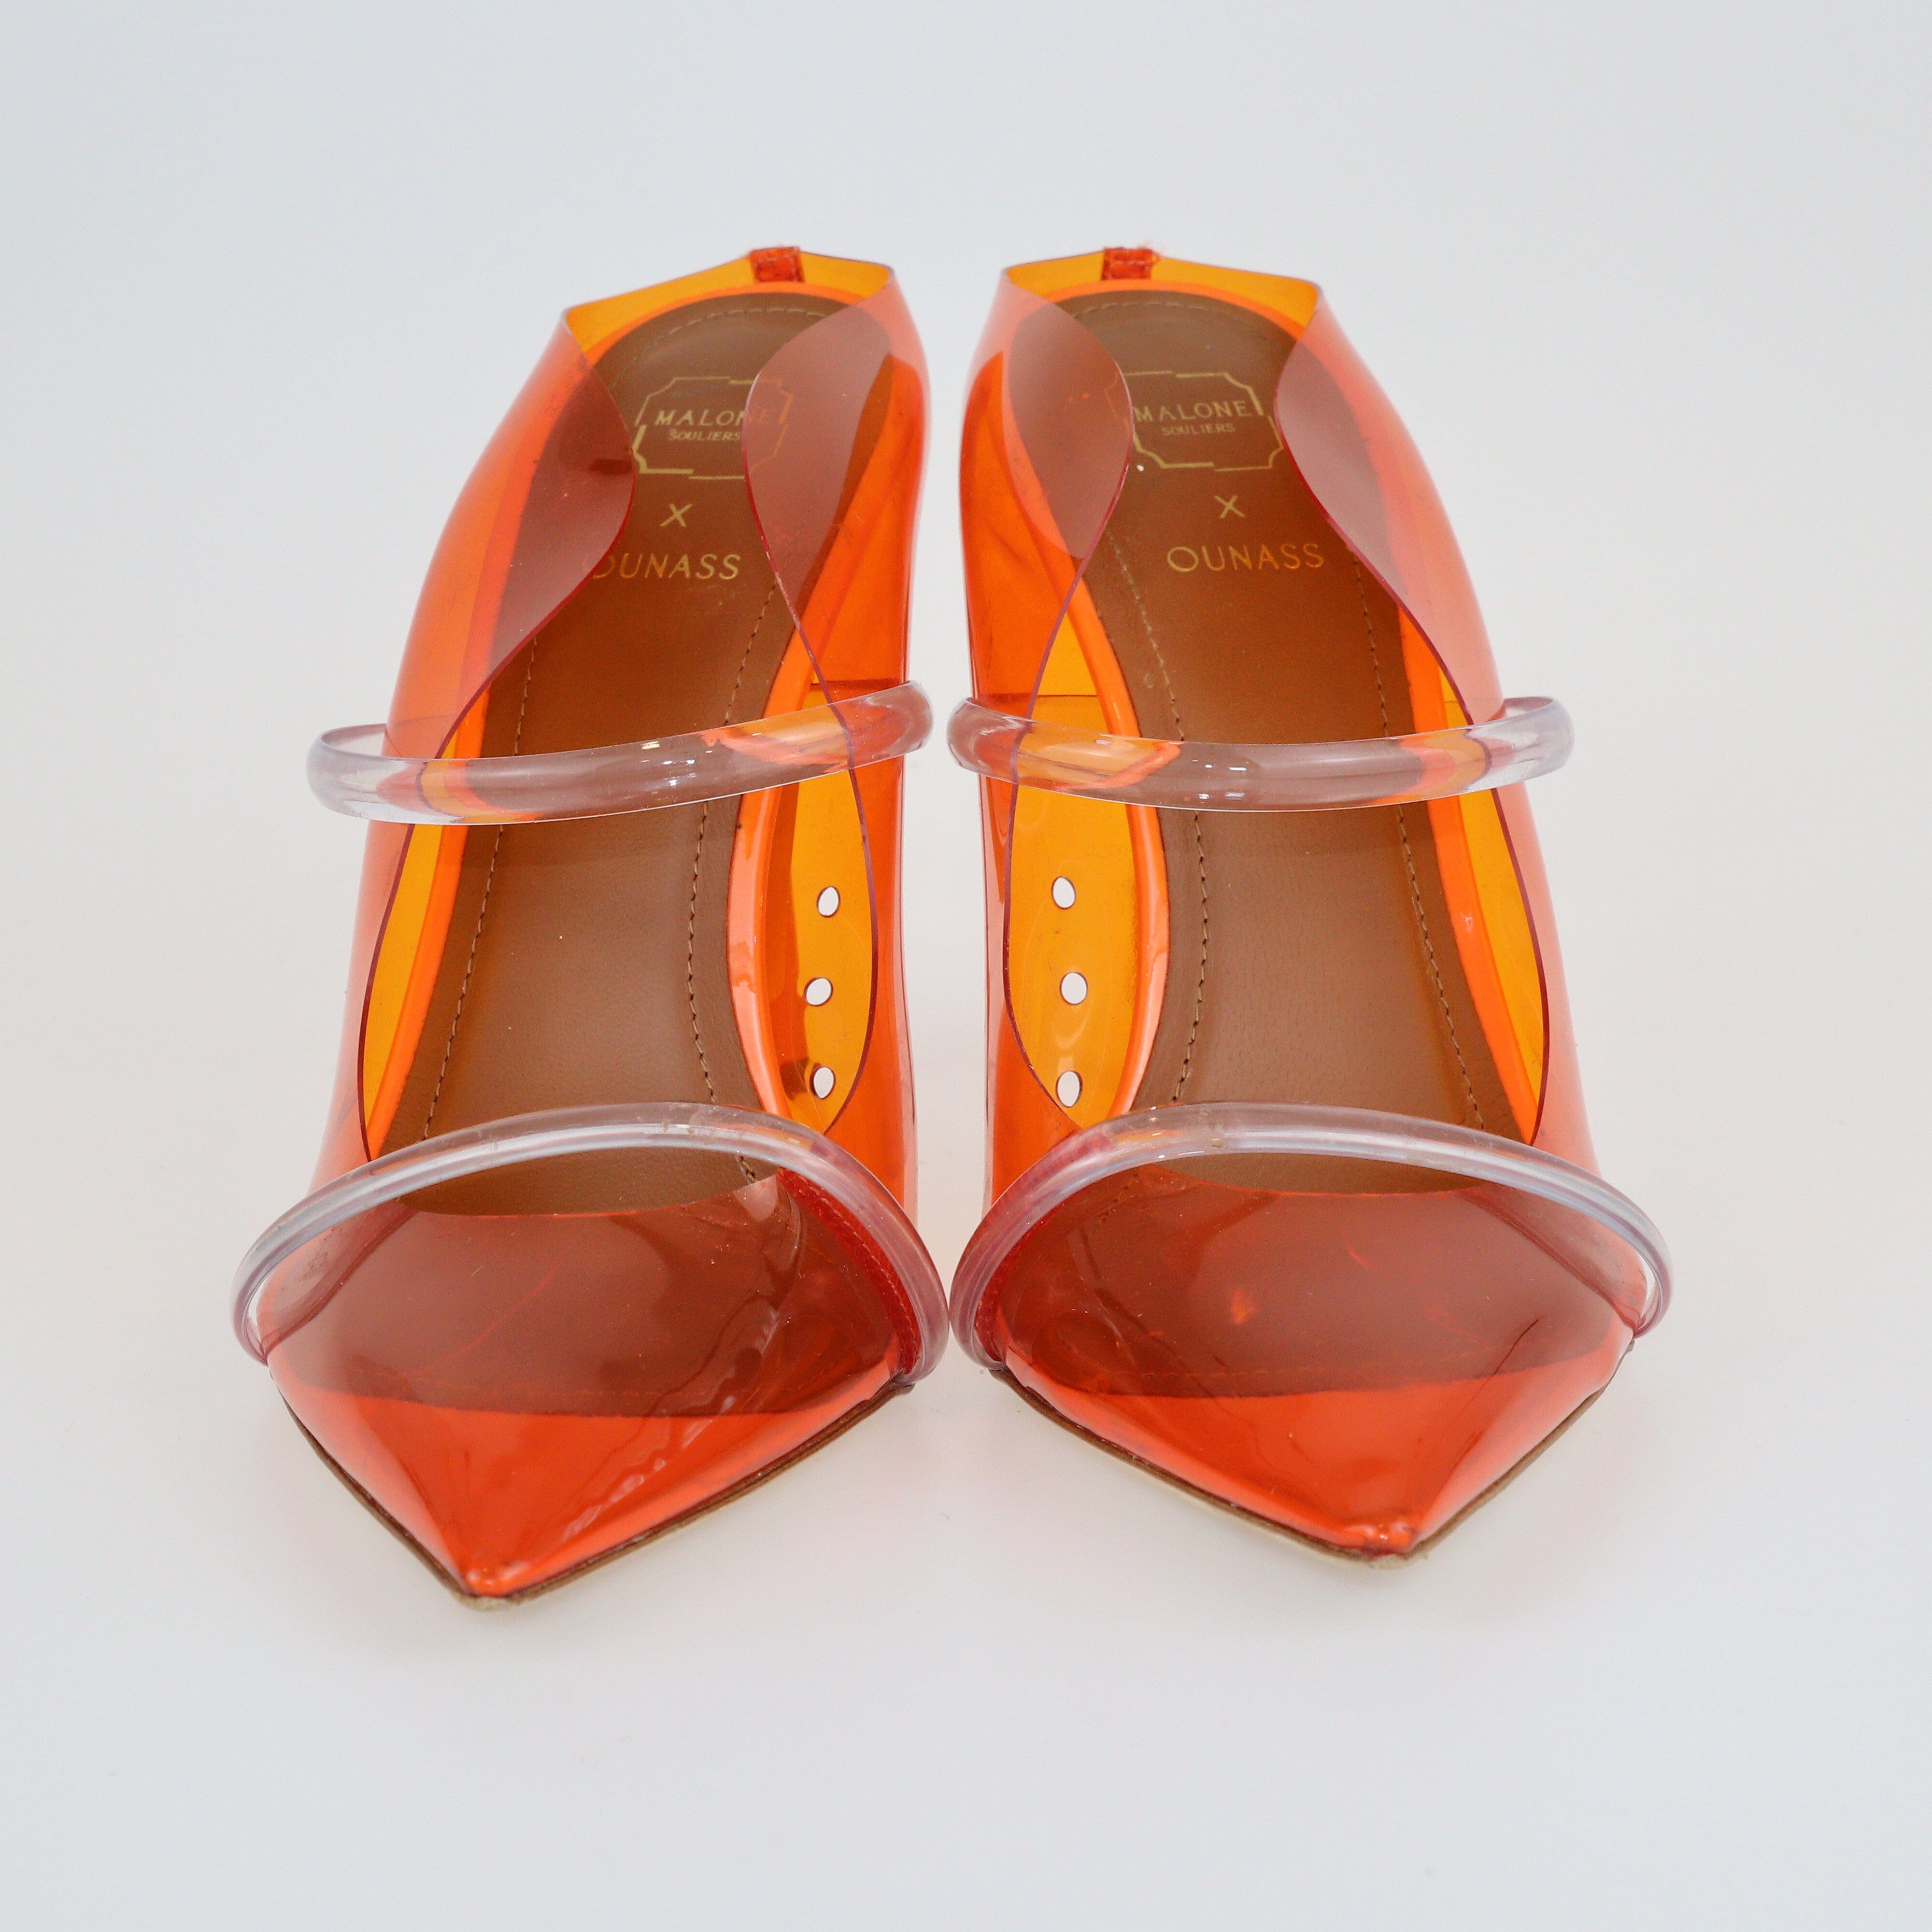 Orange Maureen 100 Mules Shoes Malone Souliers 